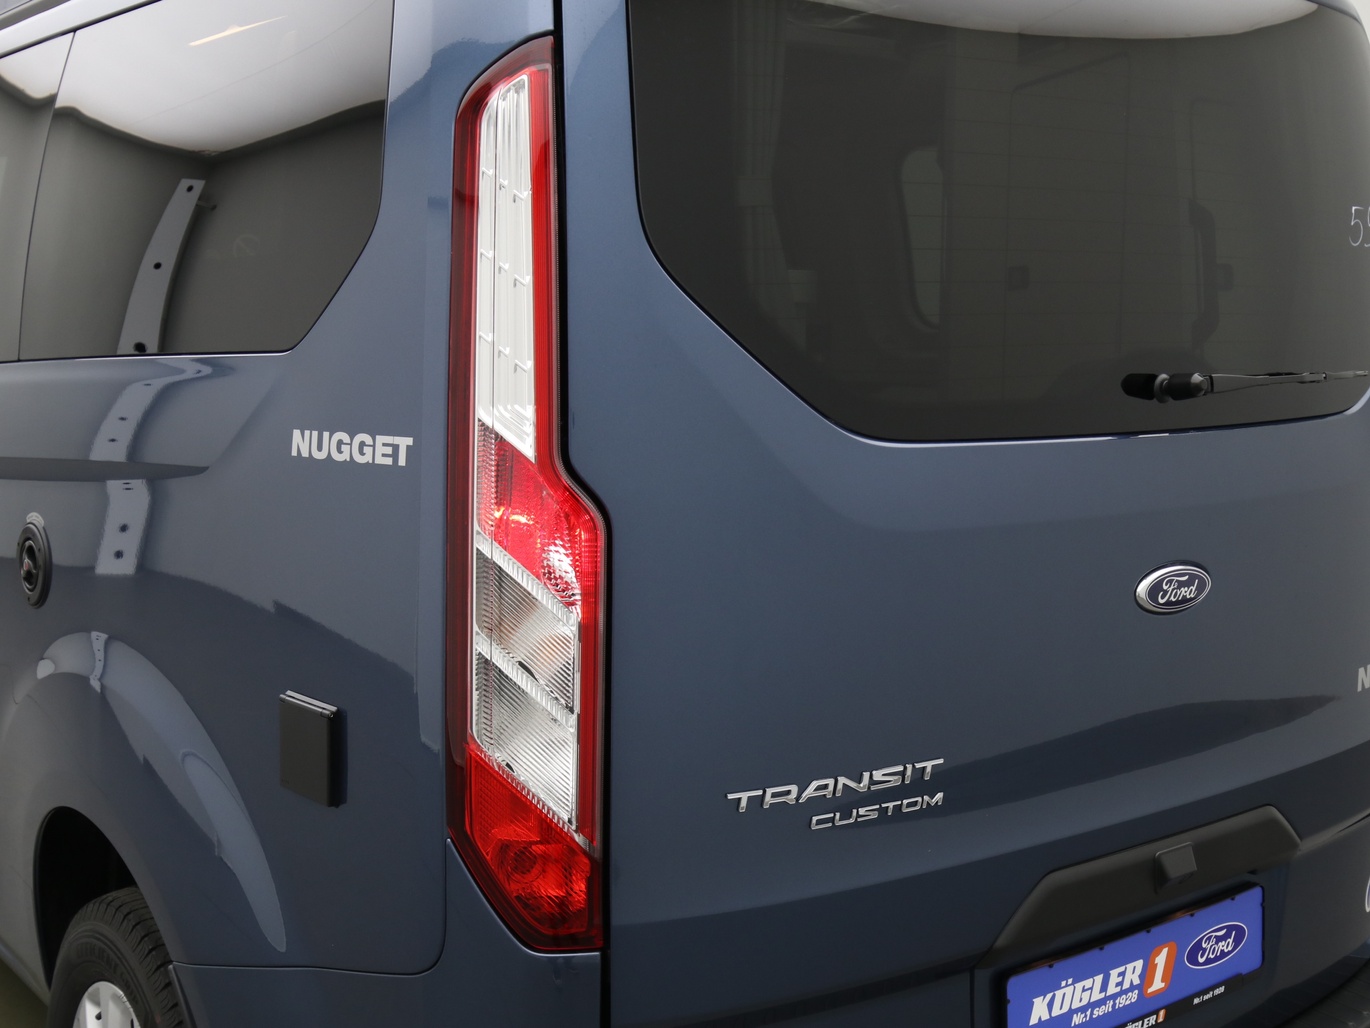  Ford Transit Nugget Aufstelldach 185PS Aut. in Chroma Blau 